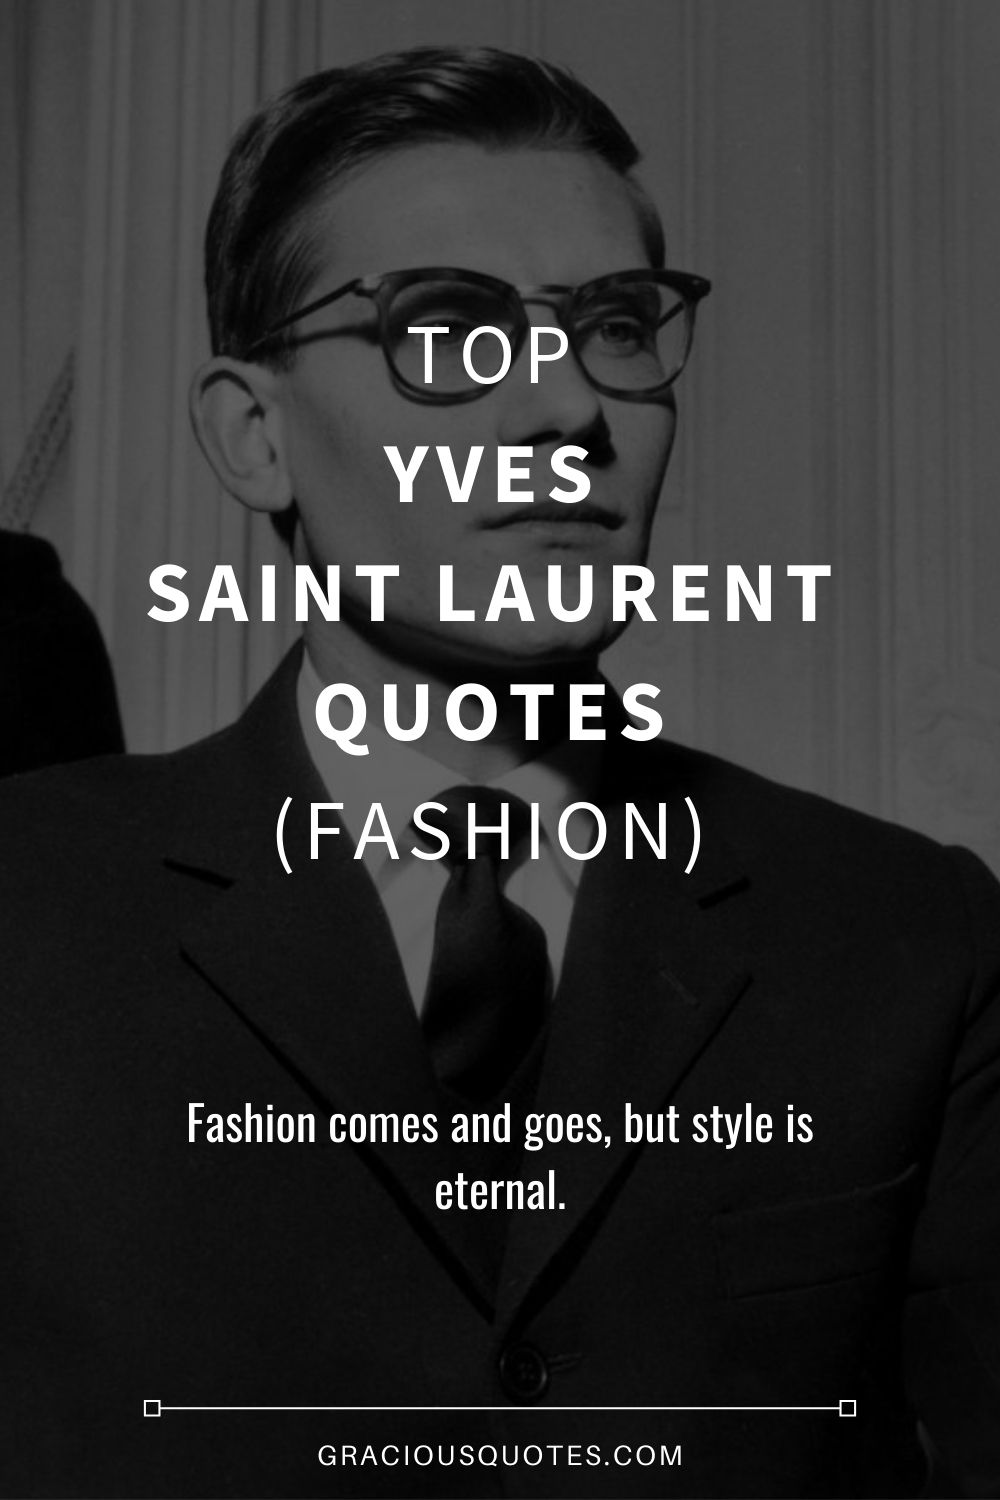 Top Yves Saint Laurent Quotes (FASHION) - Gracious Quotes